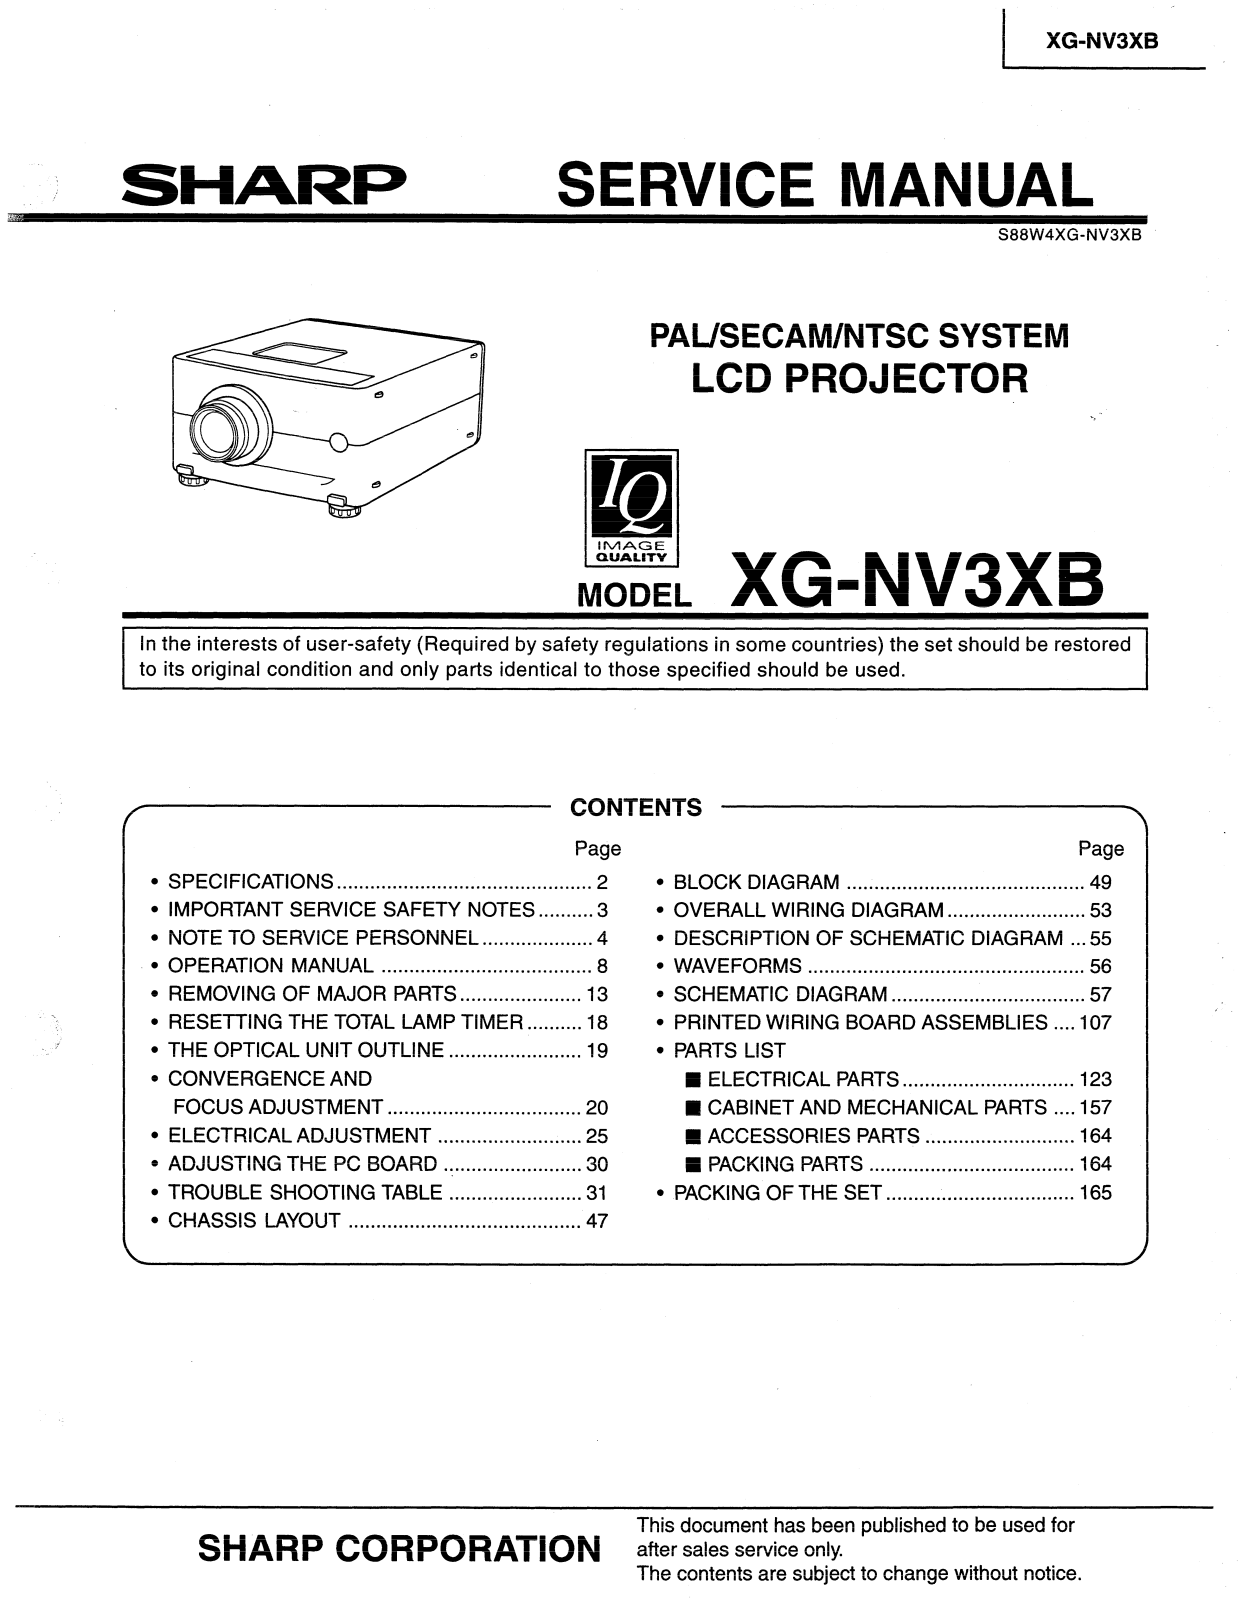 Sharp XG-NV3XB Service Manual